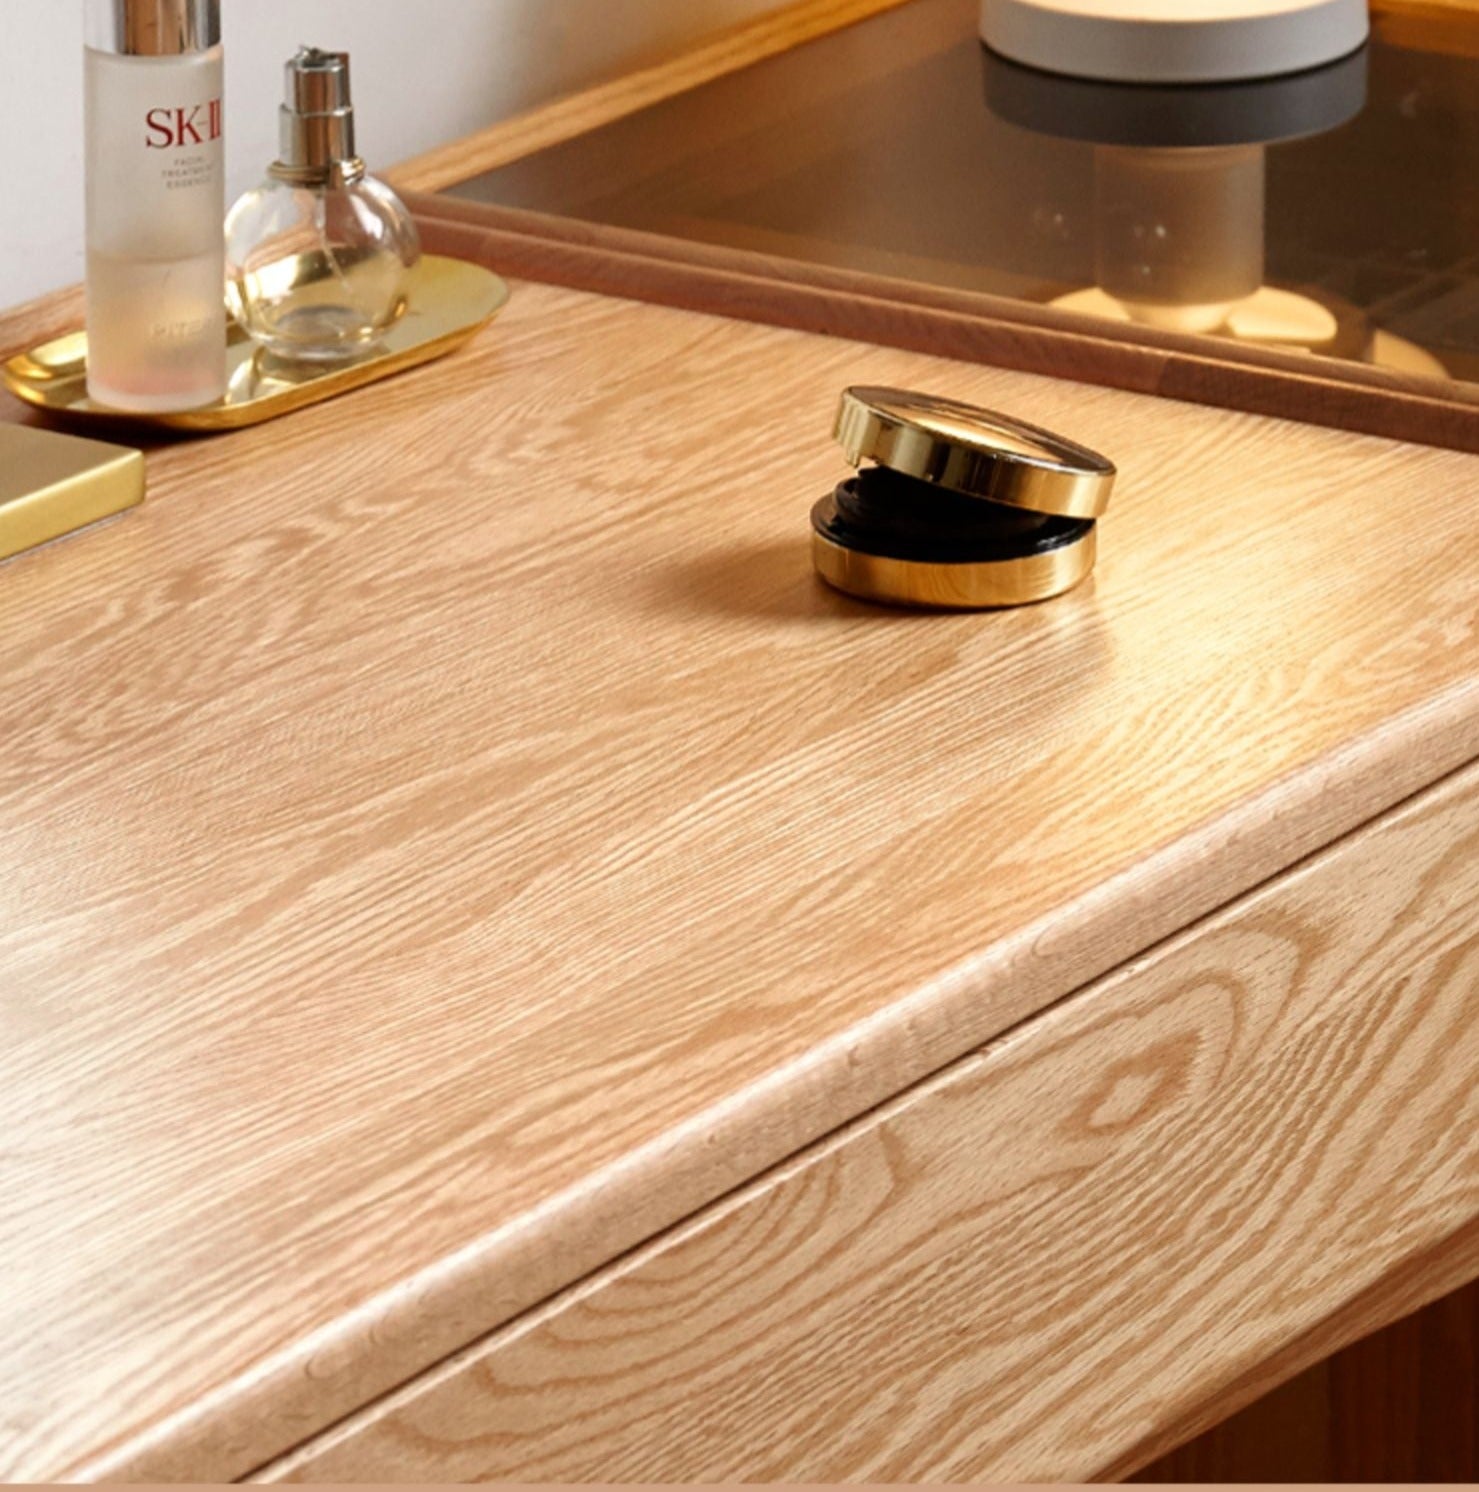 Nordic dressing table Oak solid wood"